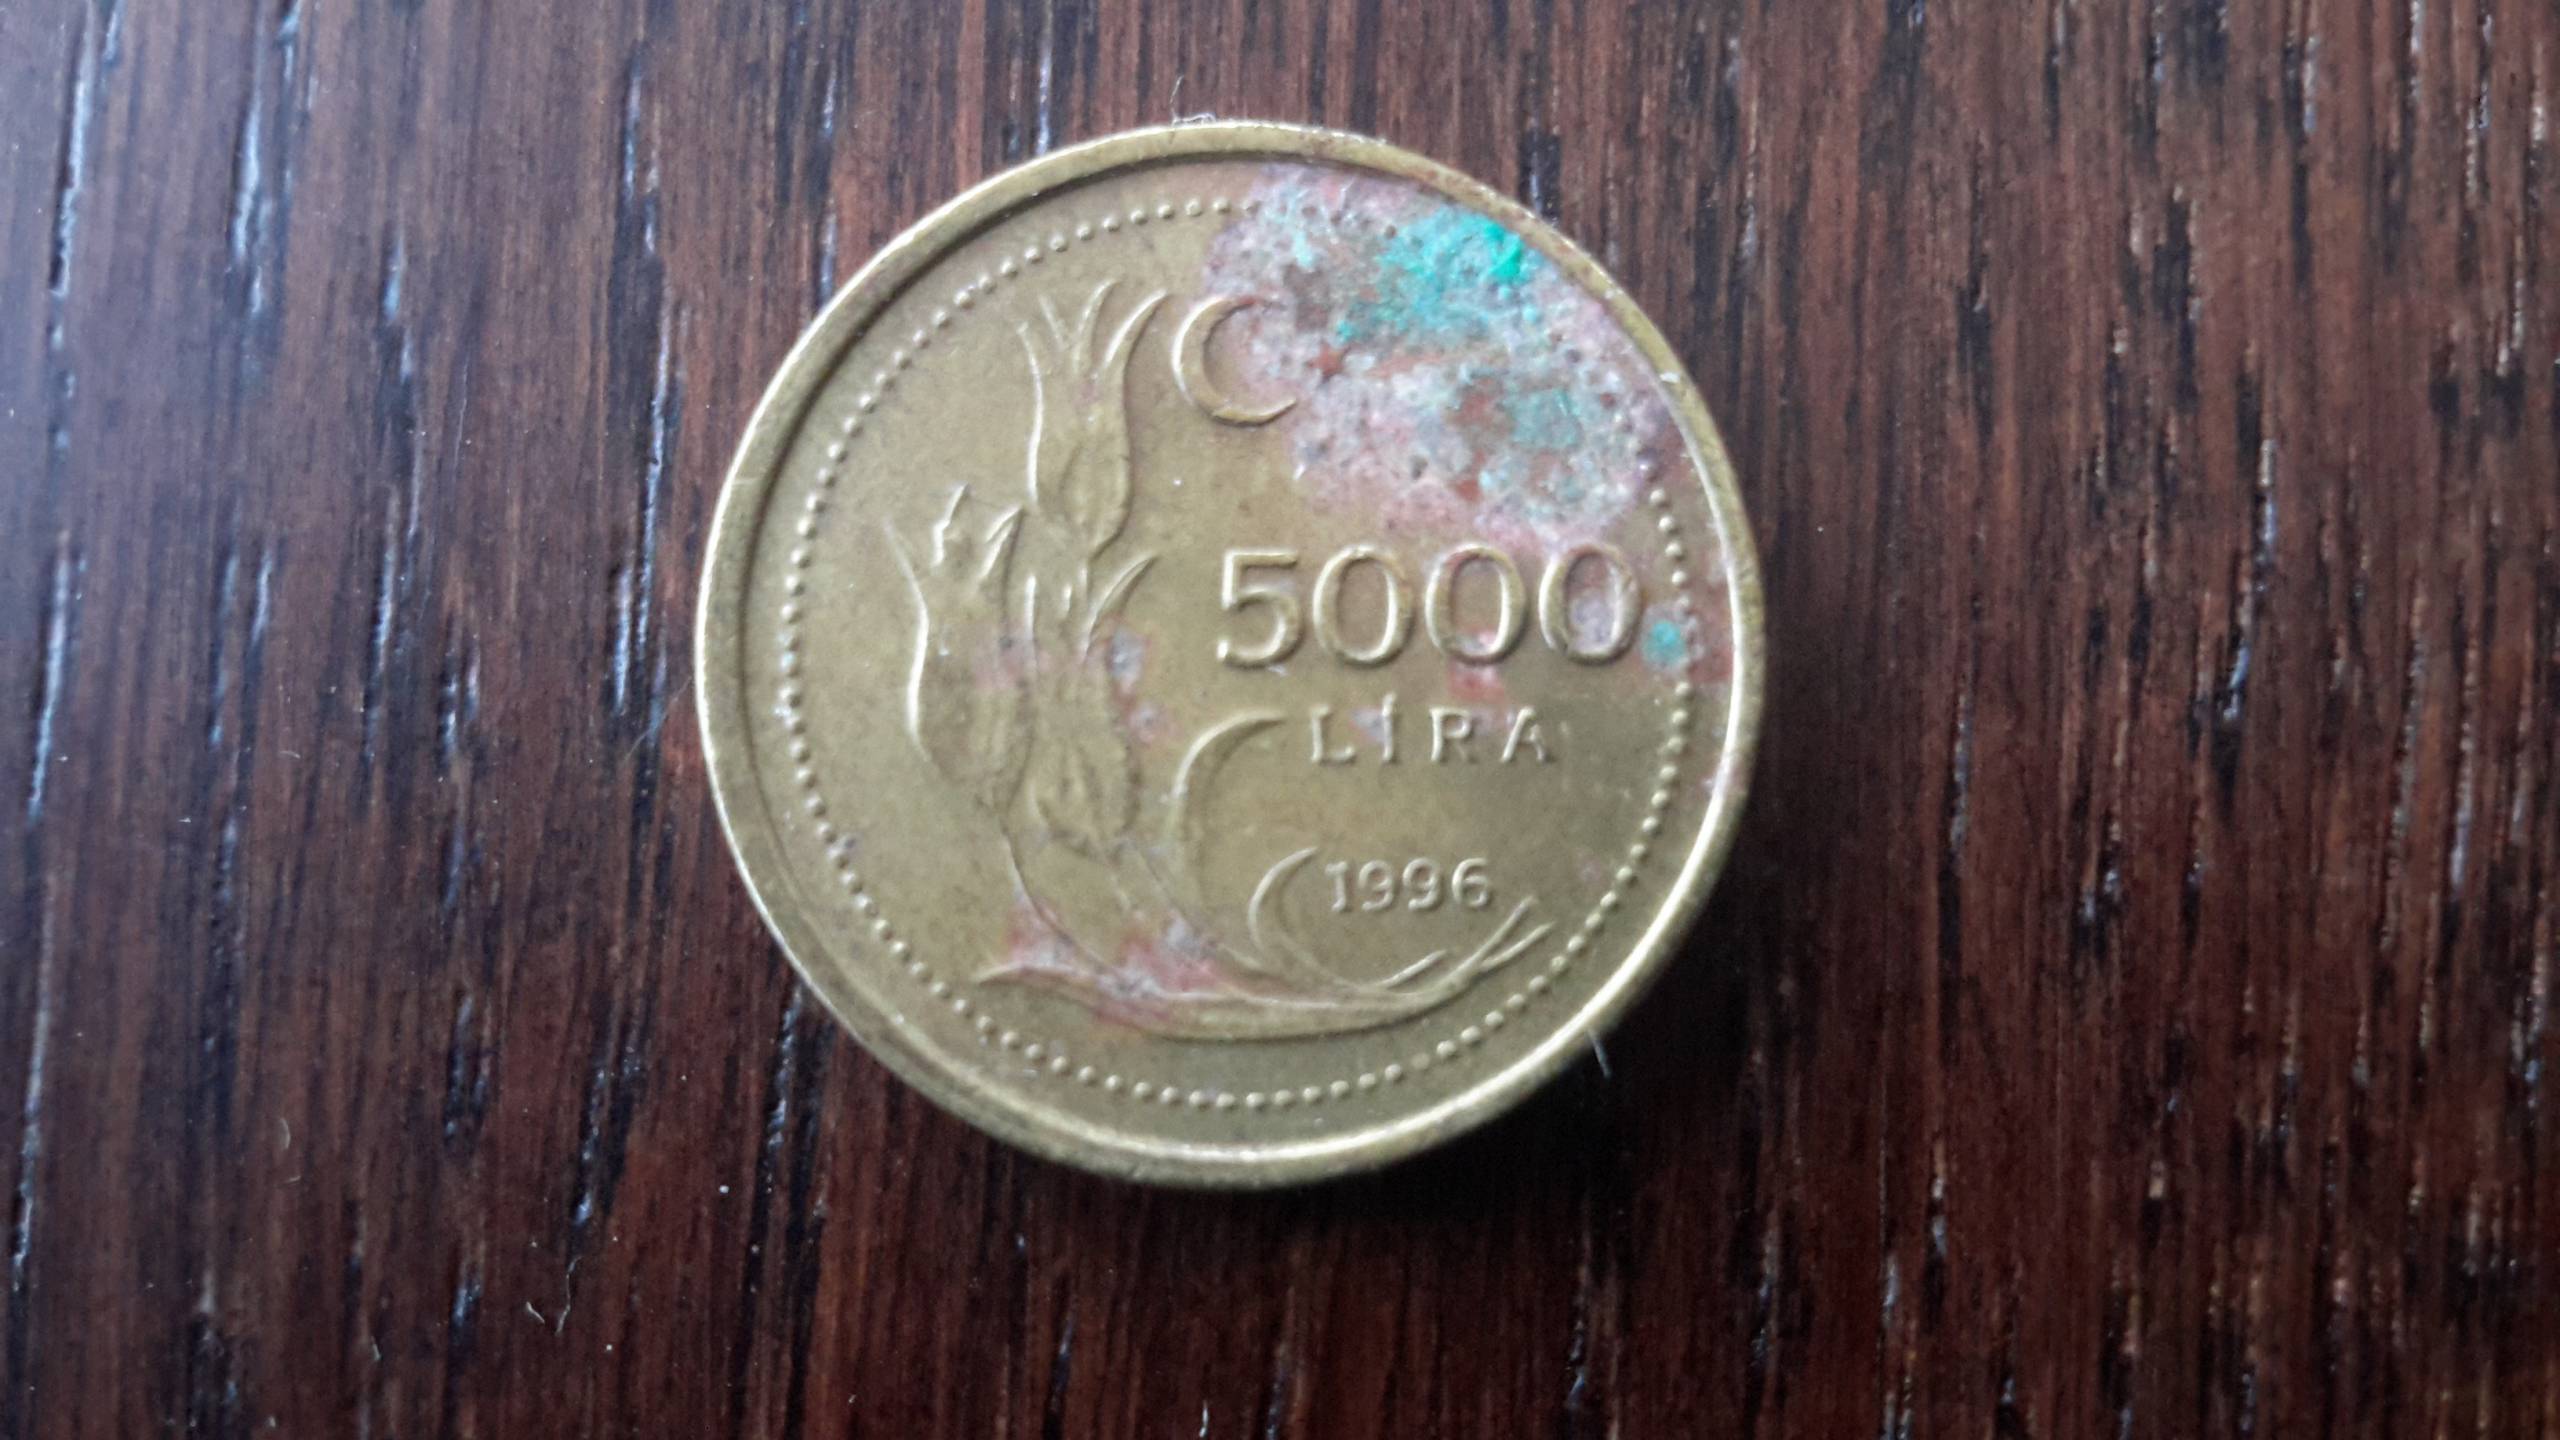 140 лир в рублях. Монета turkiye Cumhuriyeti c 5000 lira 1996 года.